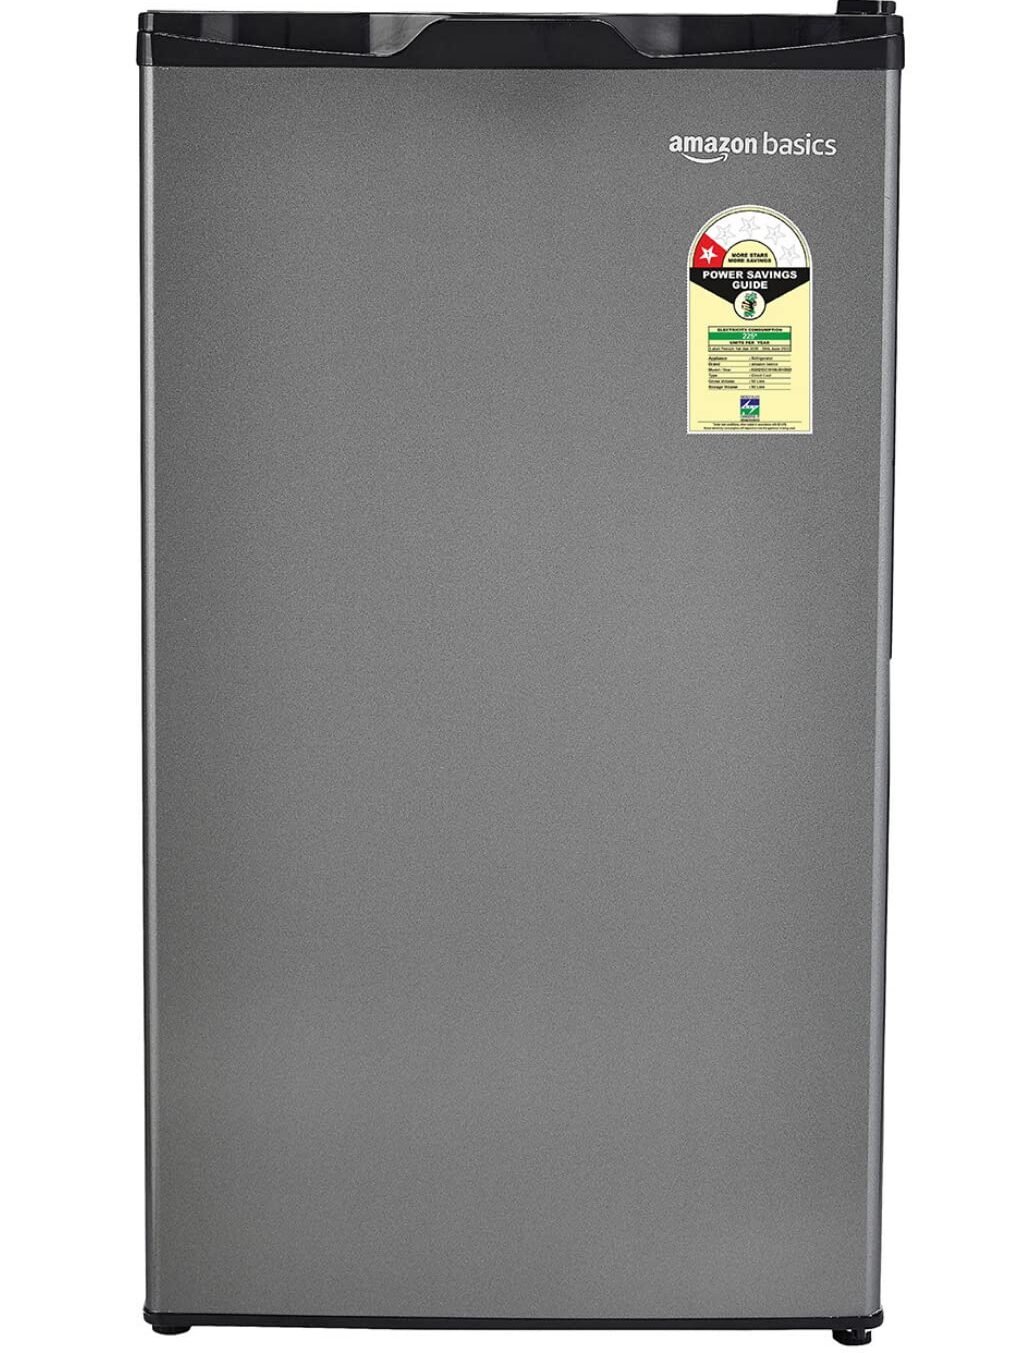 AmazonBasics 92 L 1 Star Direct Cool Single Door Refrigerator